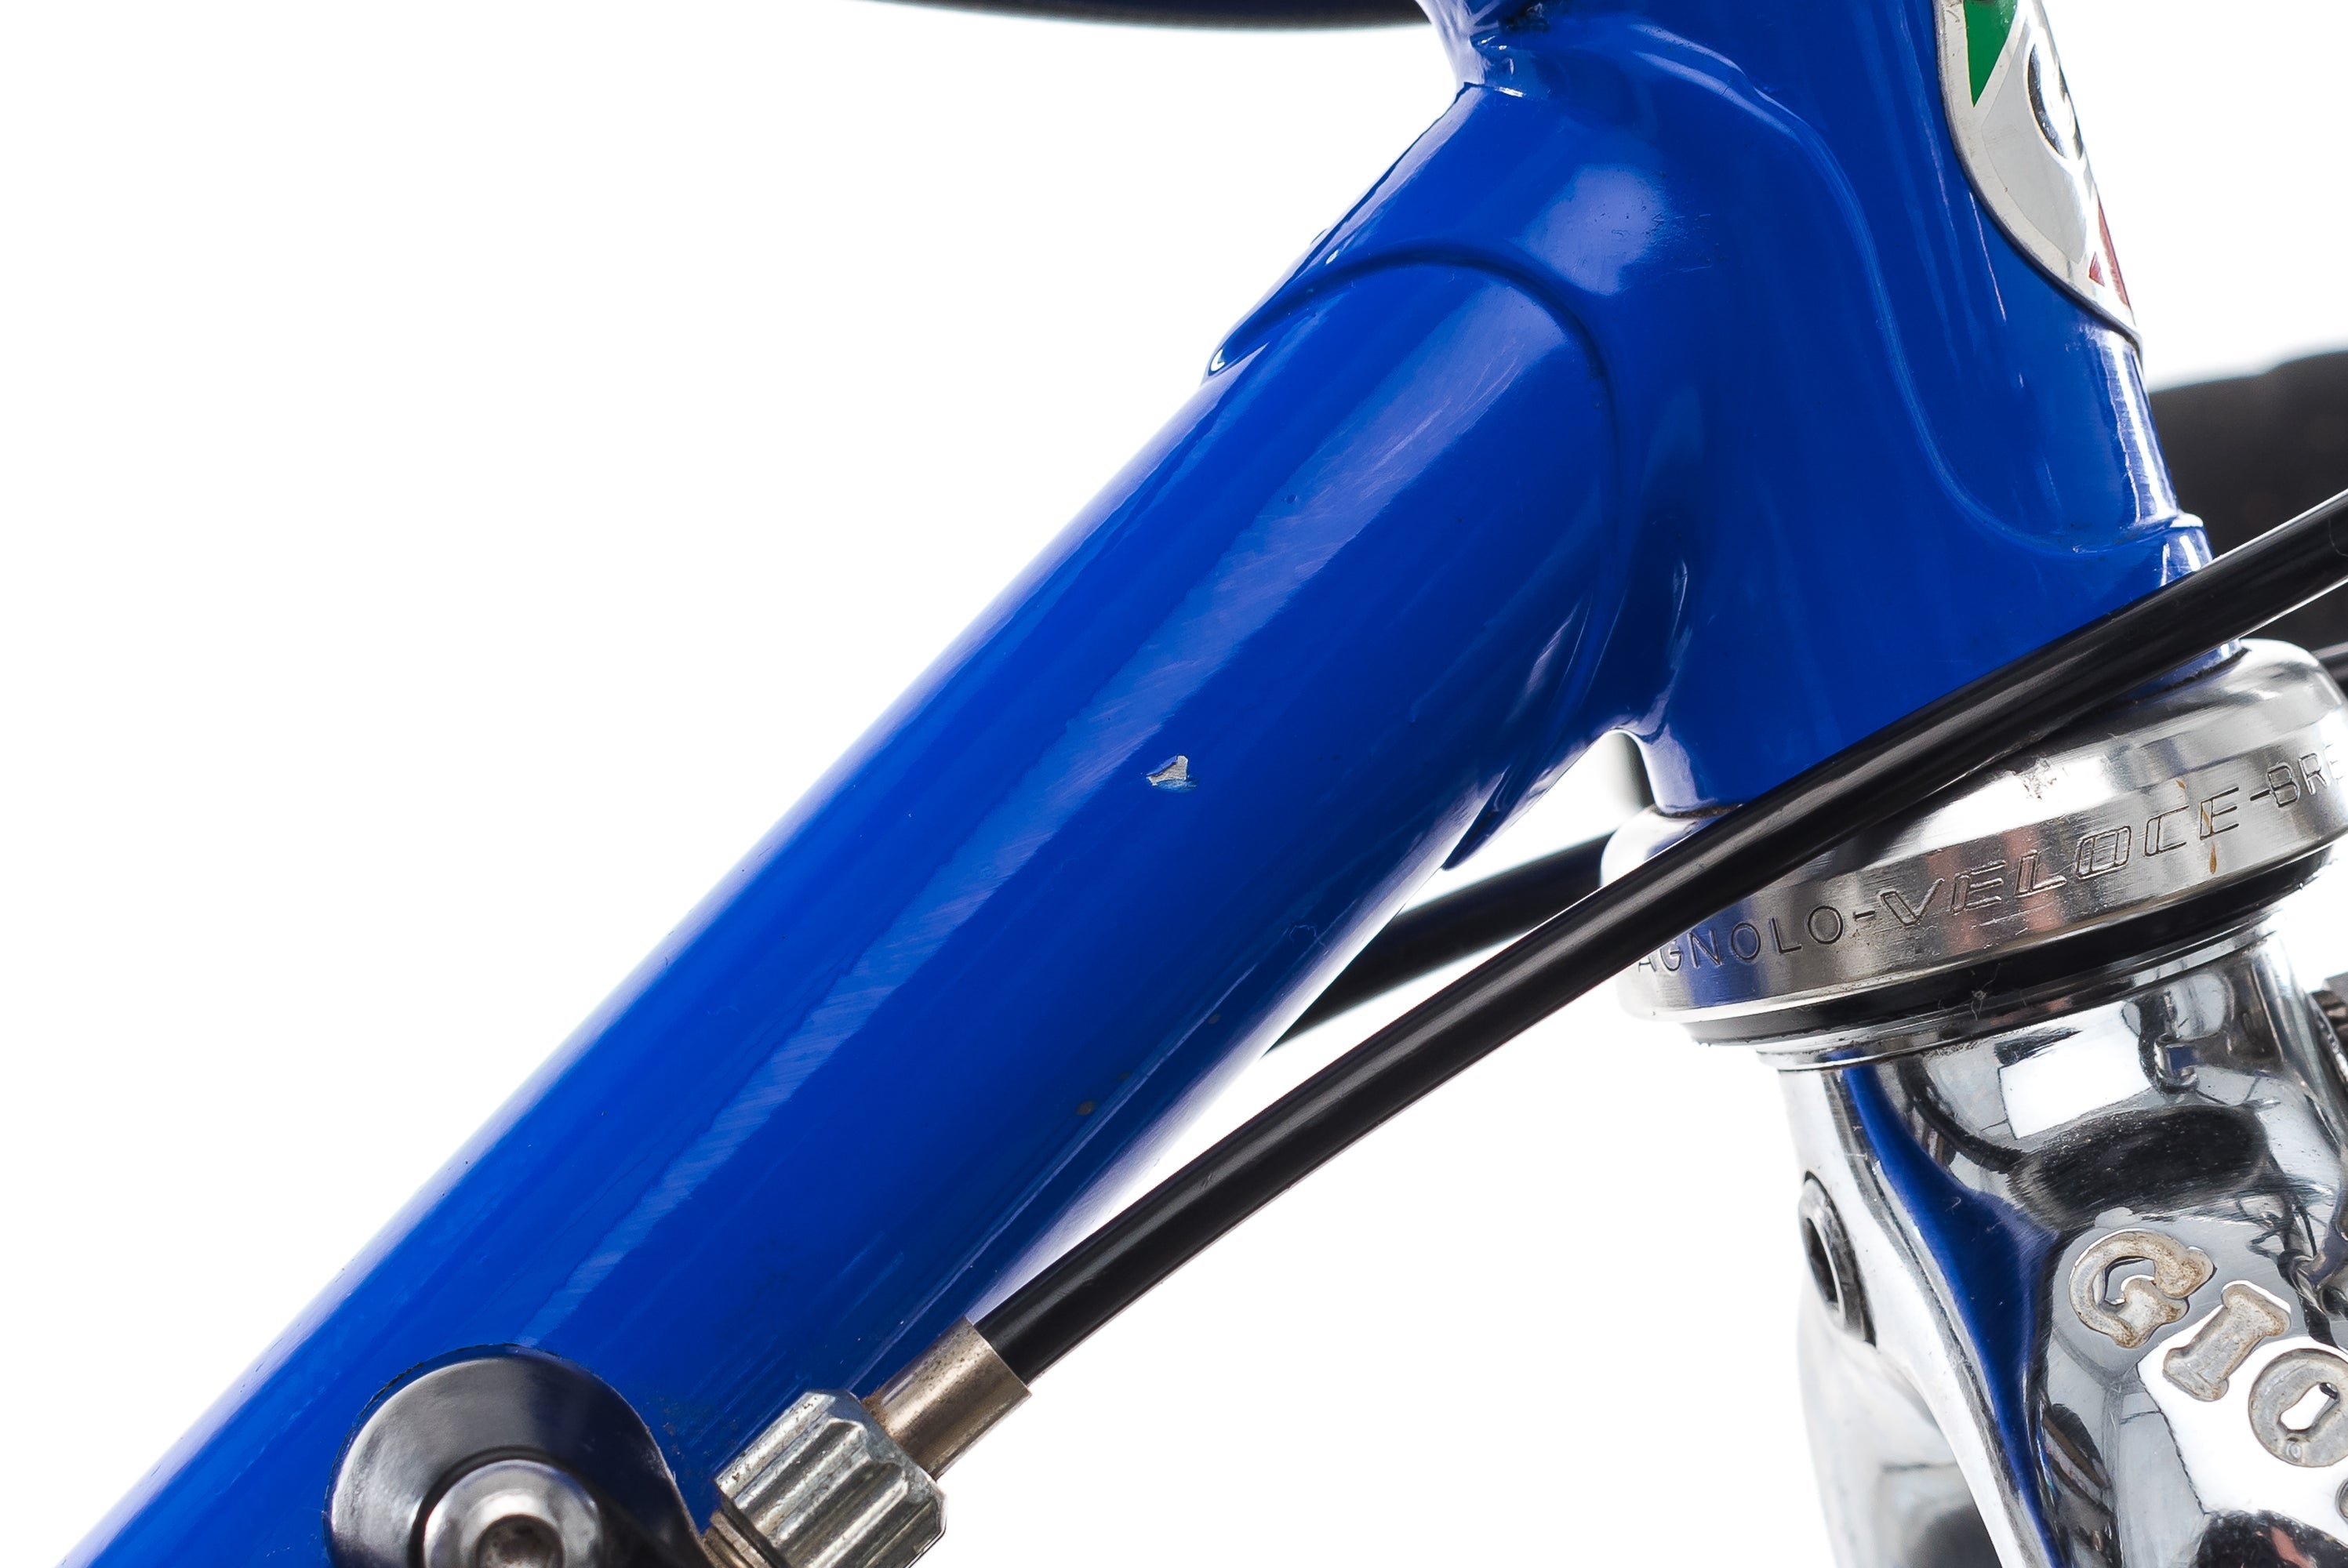 Gios Torino 50cm Bike detail 1